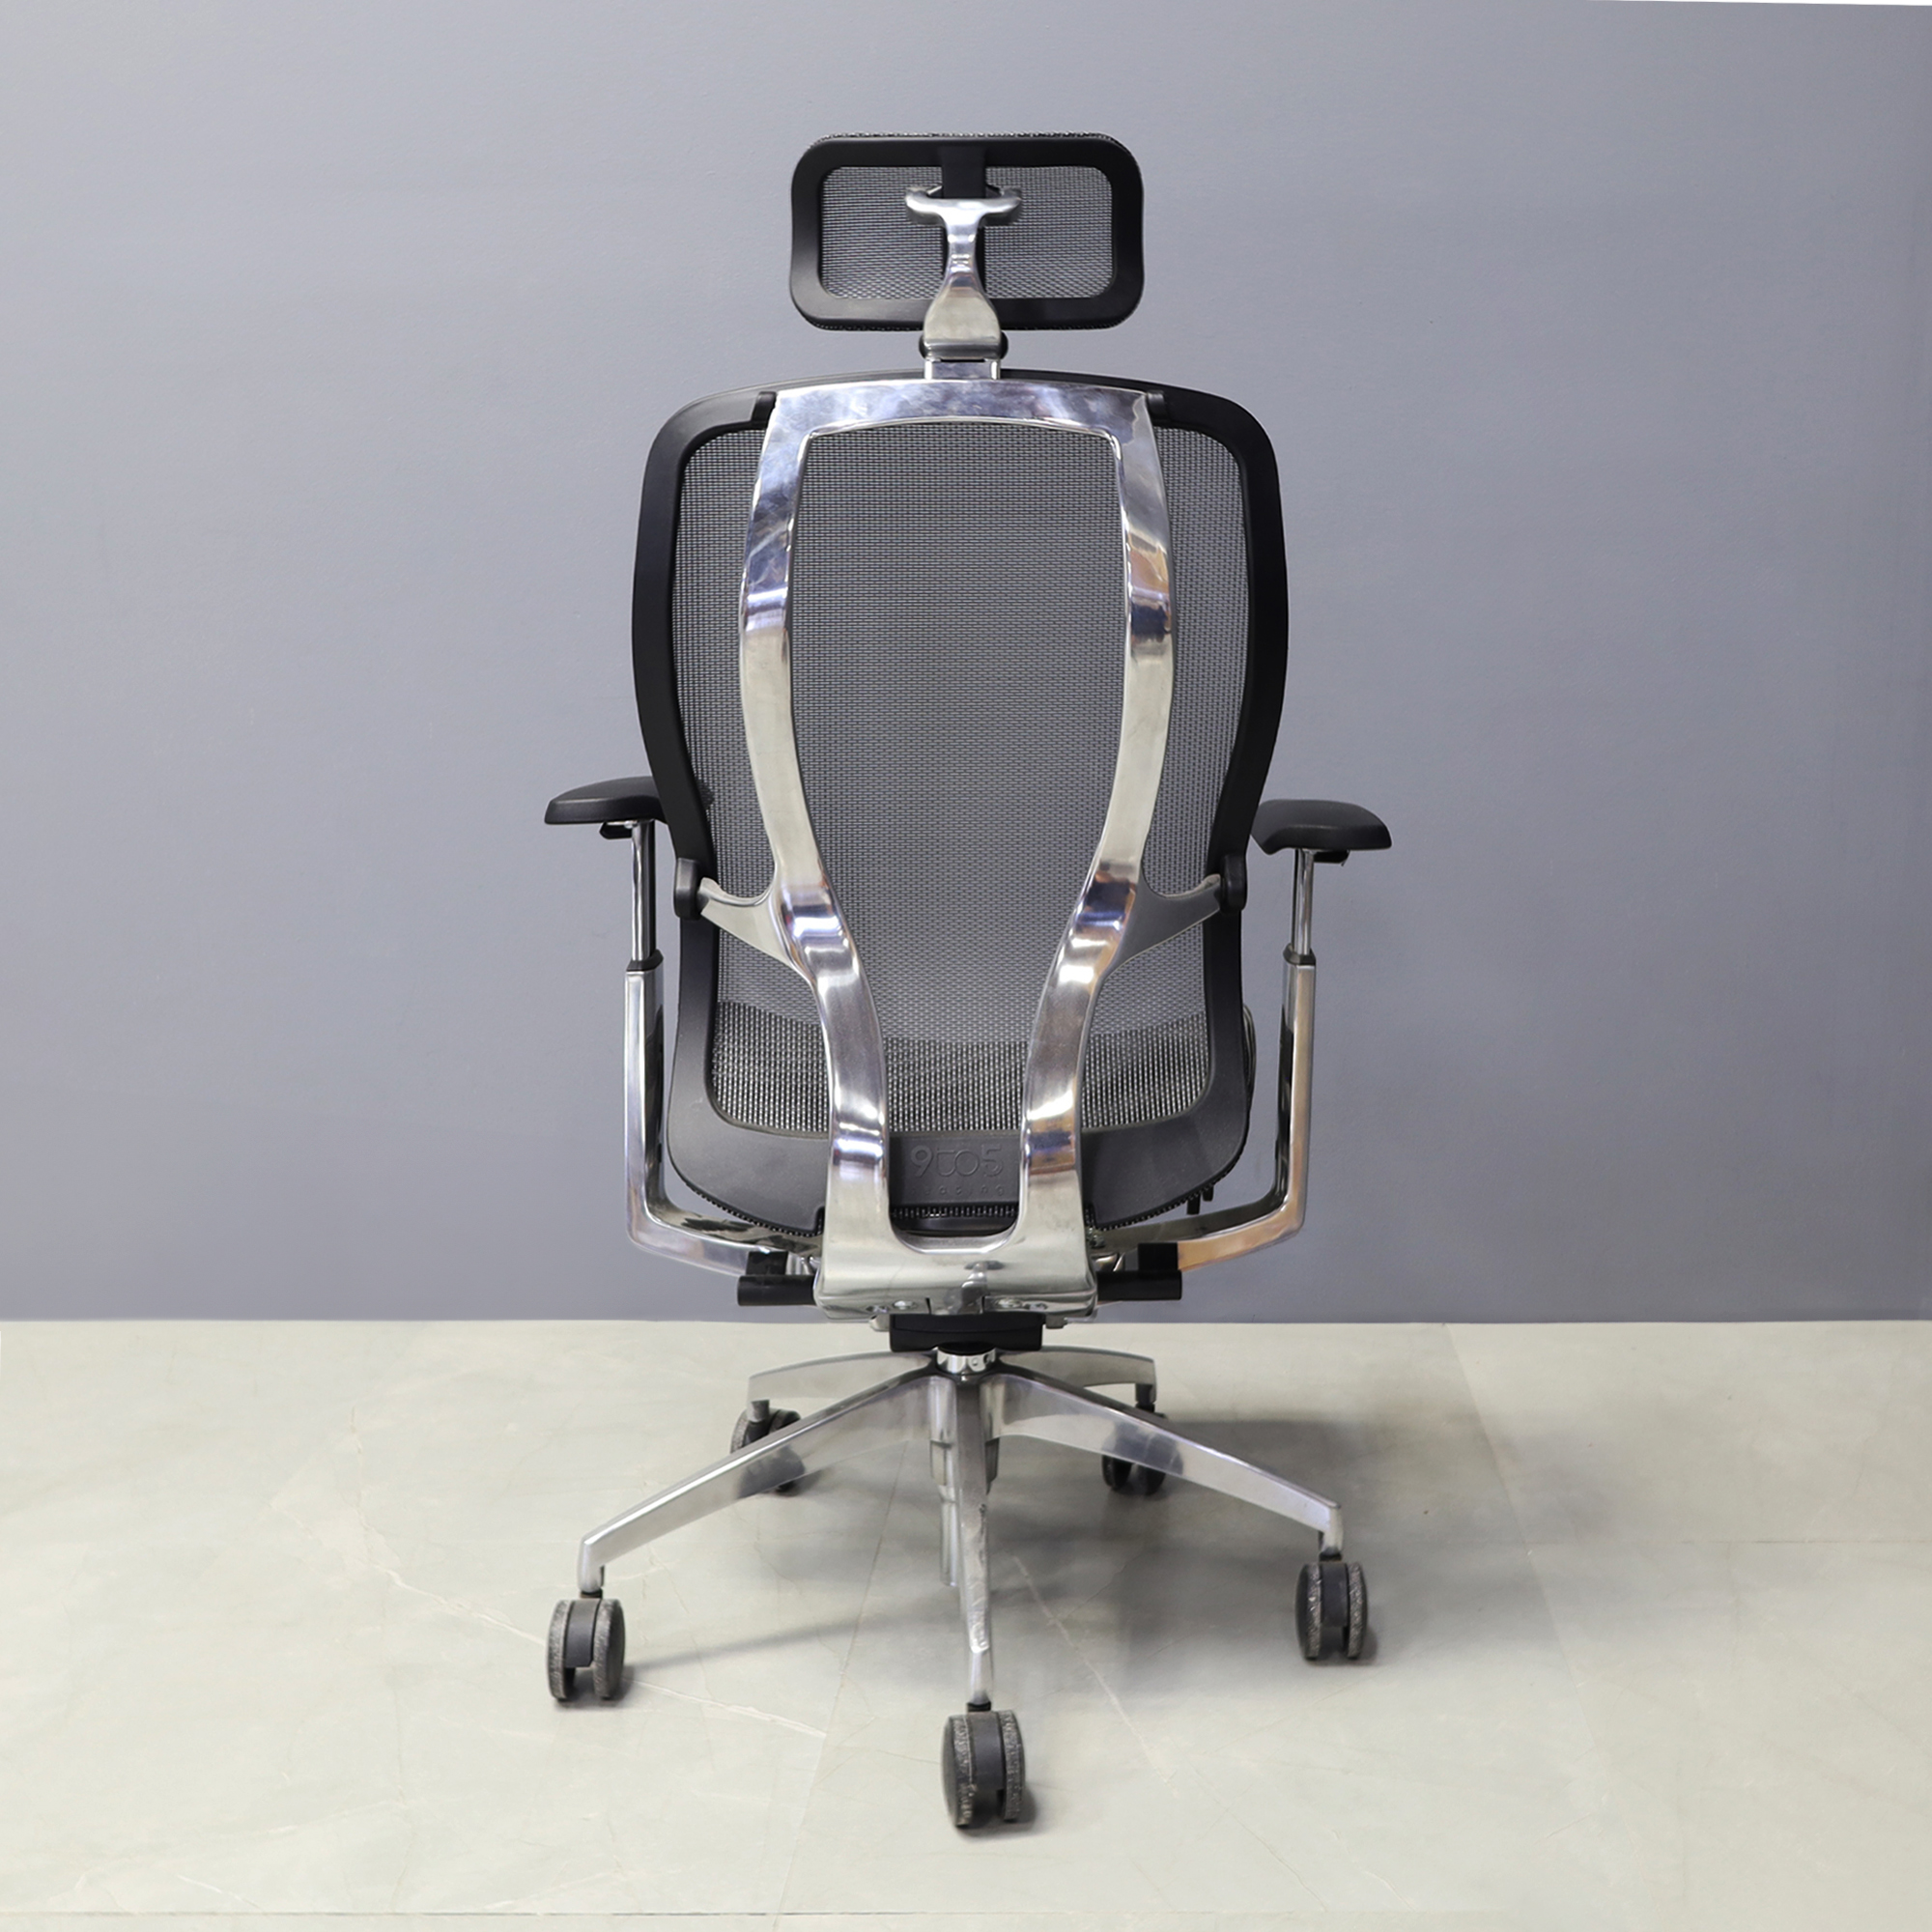 VESTA Ergonomic High Back Mesh Executive Desk Chair, shown here.